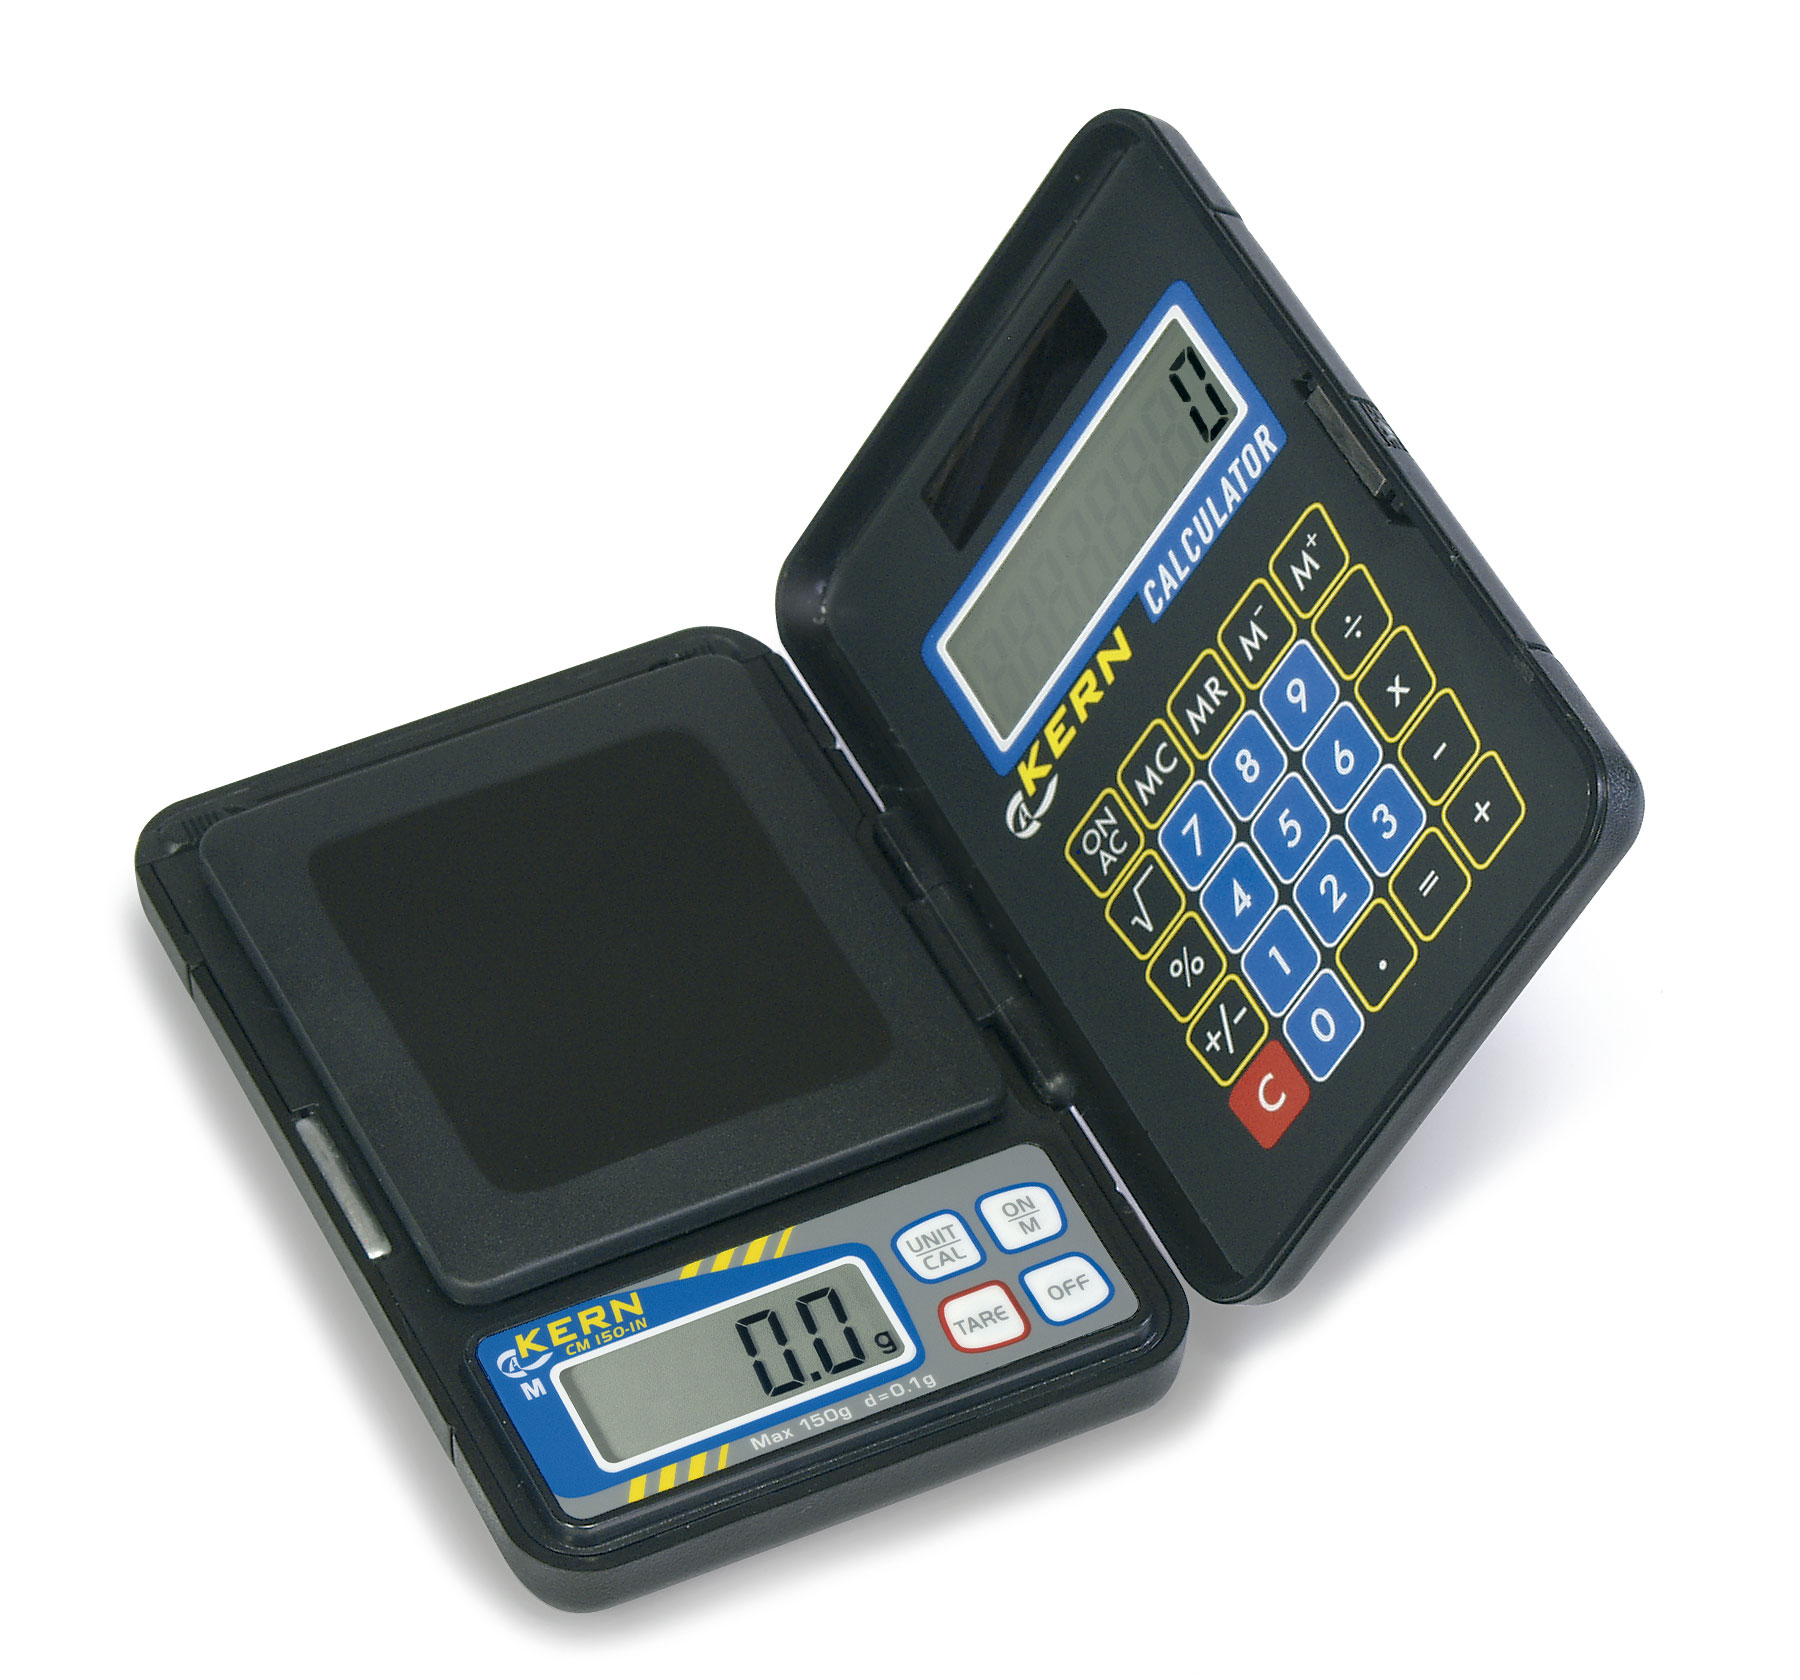 Pocket balance CM. KERN®. Model: CM 320-1N. Readability (g): 0,1. Capacity (g): 320